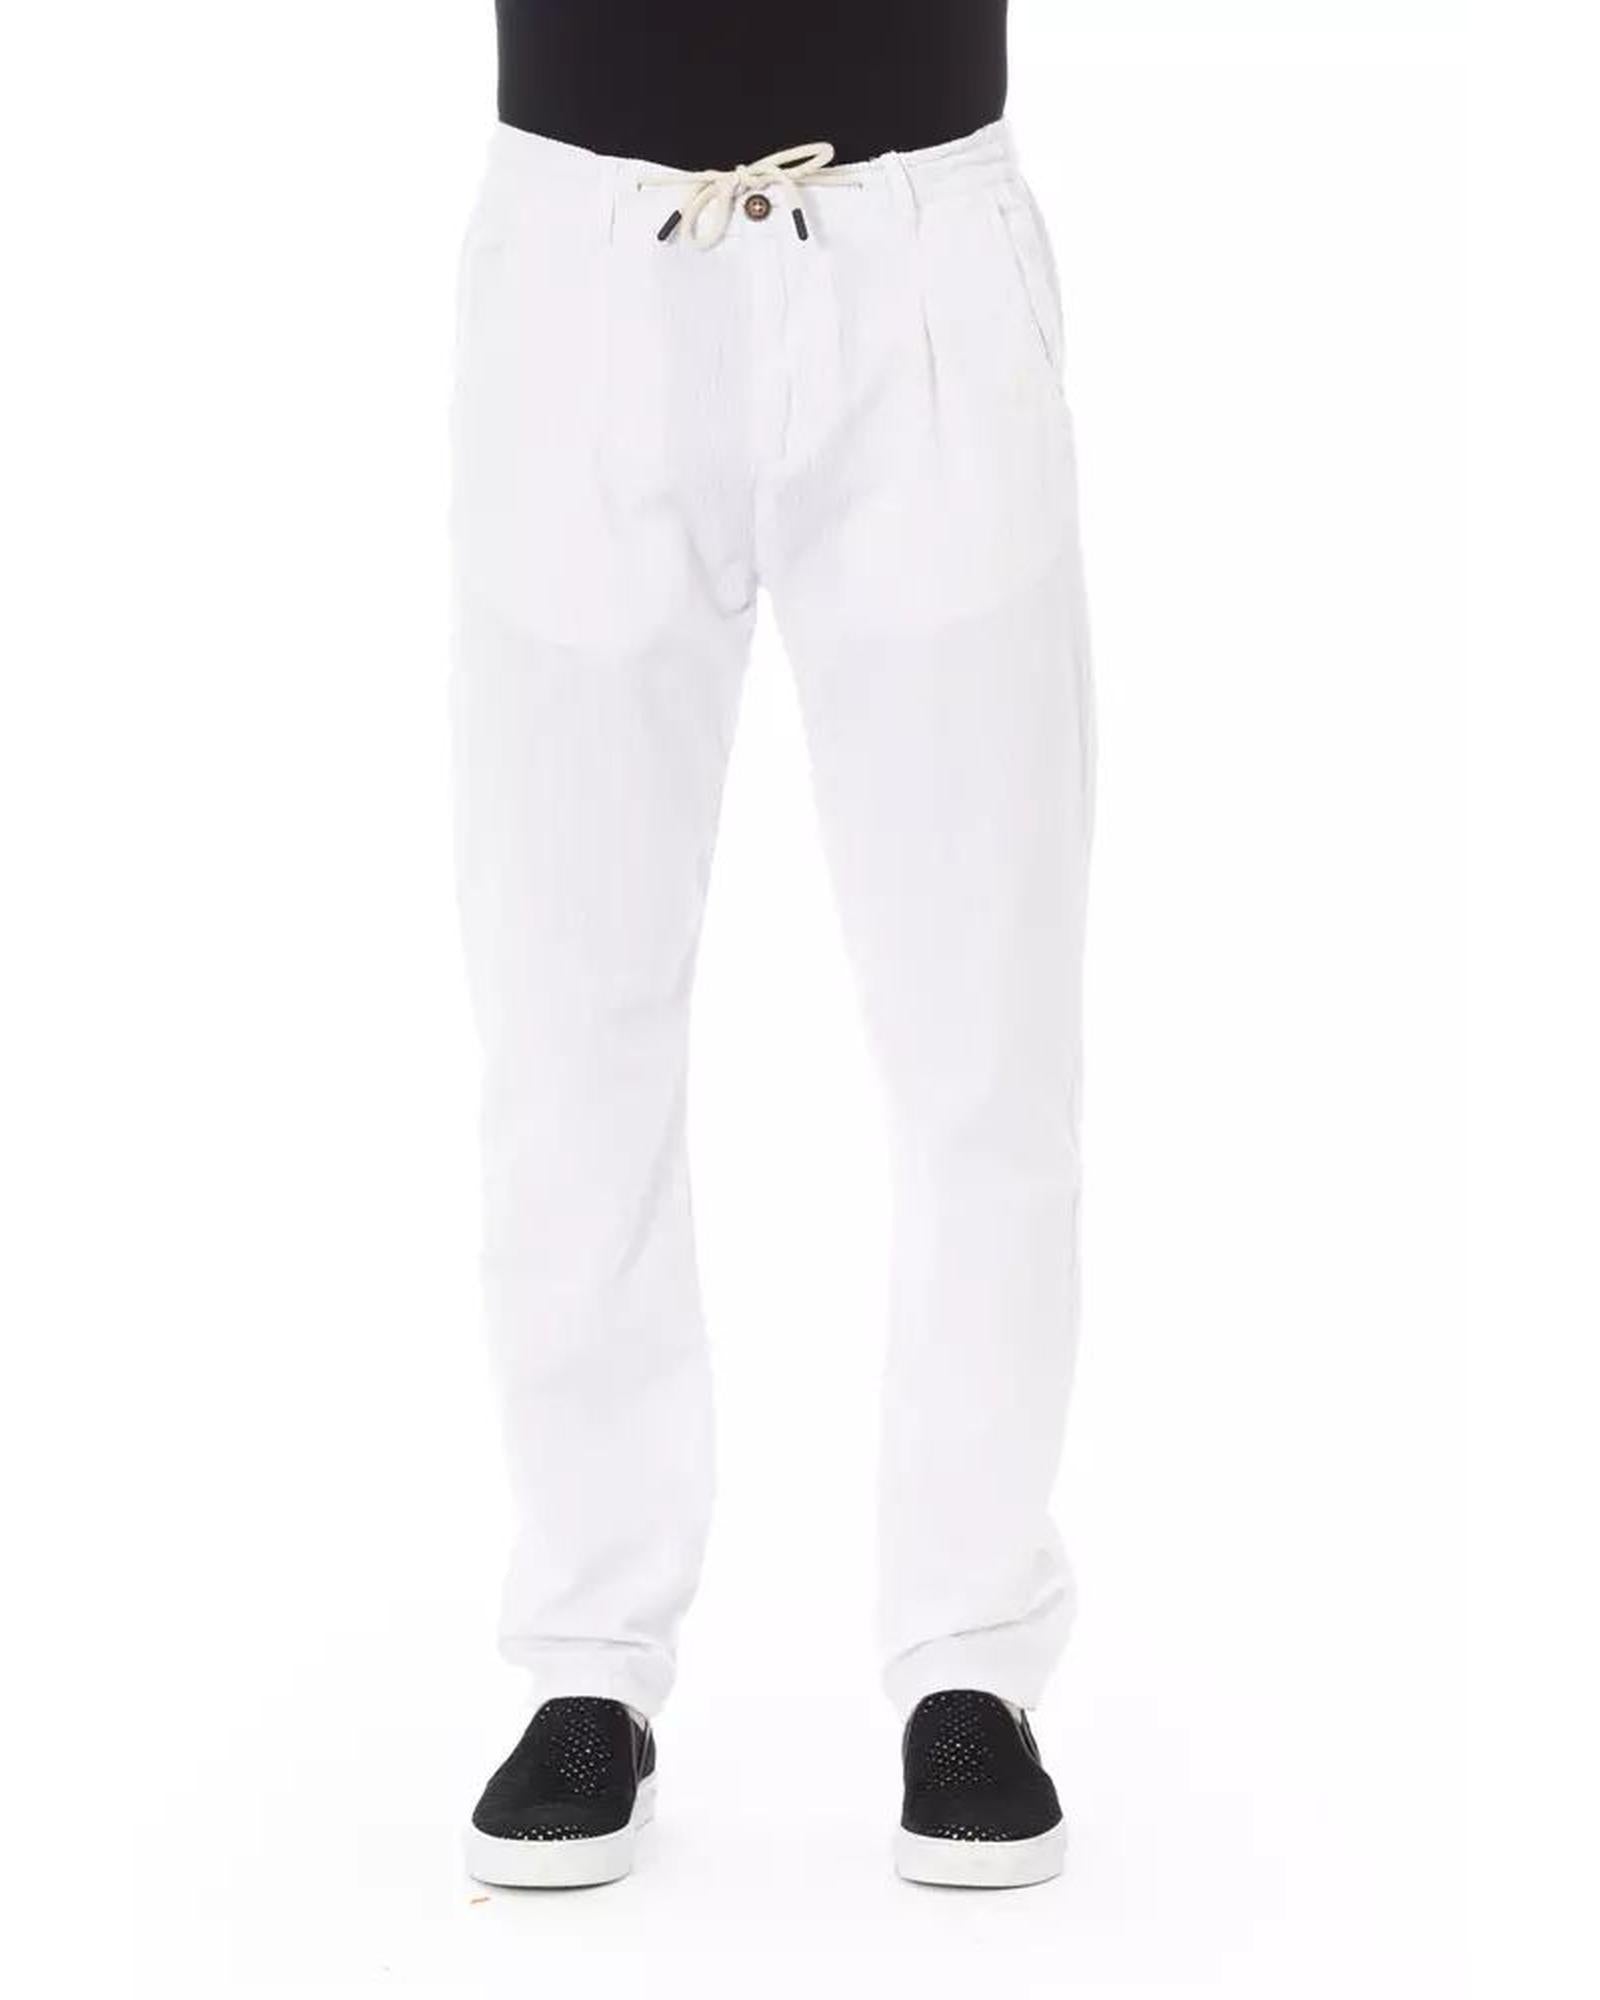 Men's White Cotton Jeans & Pant - W30 US